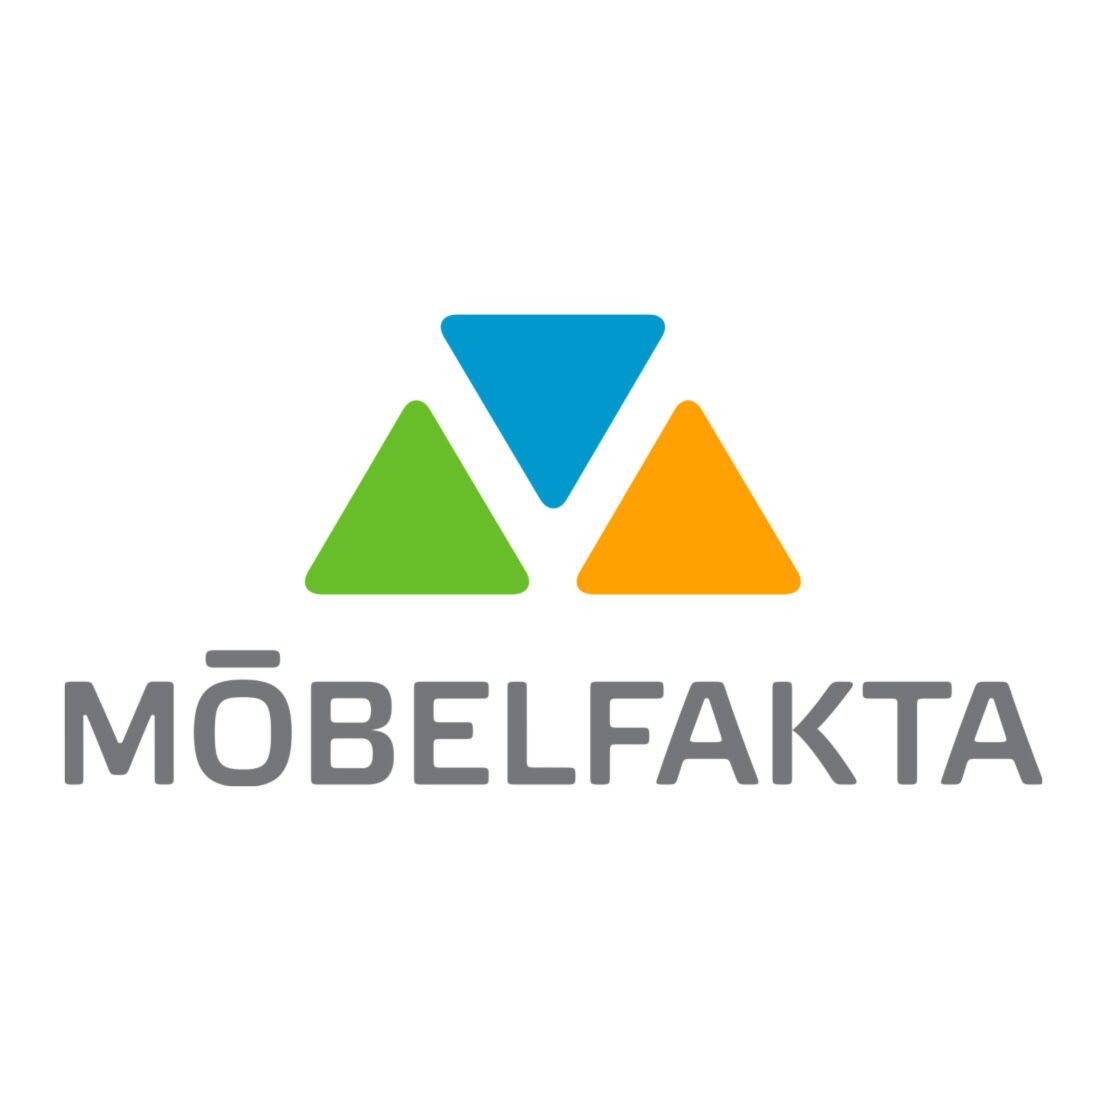 Möbelfakta certified logo